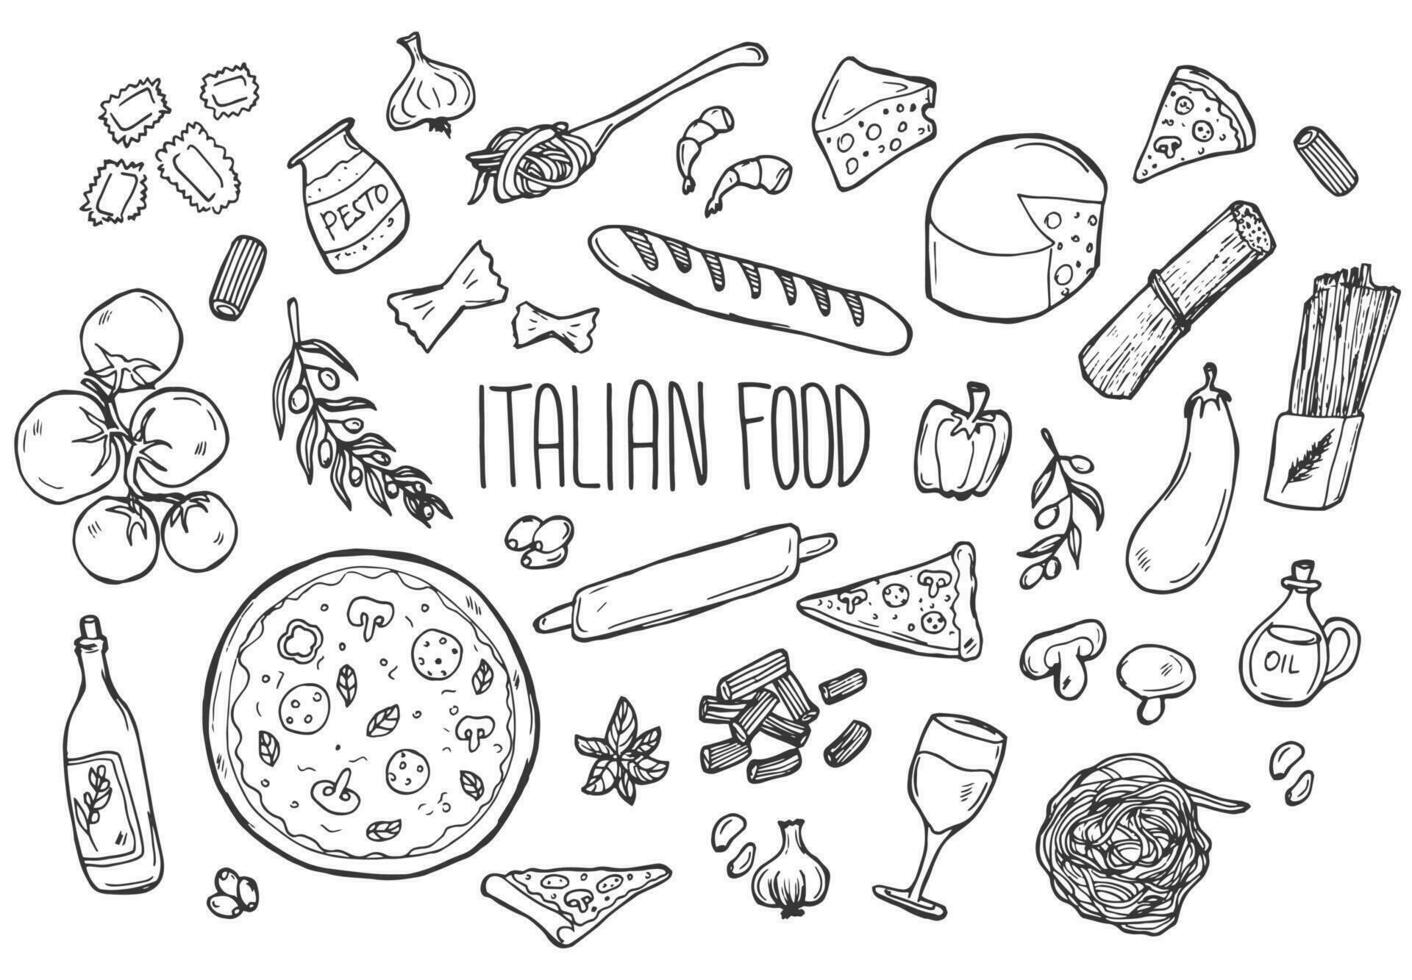 conjunto de garabatos, mano dibujado áspero sencillo italiano cocina comida bocetos aislado en blanco antecedentes vector